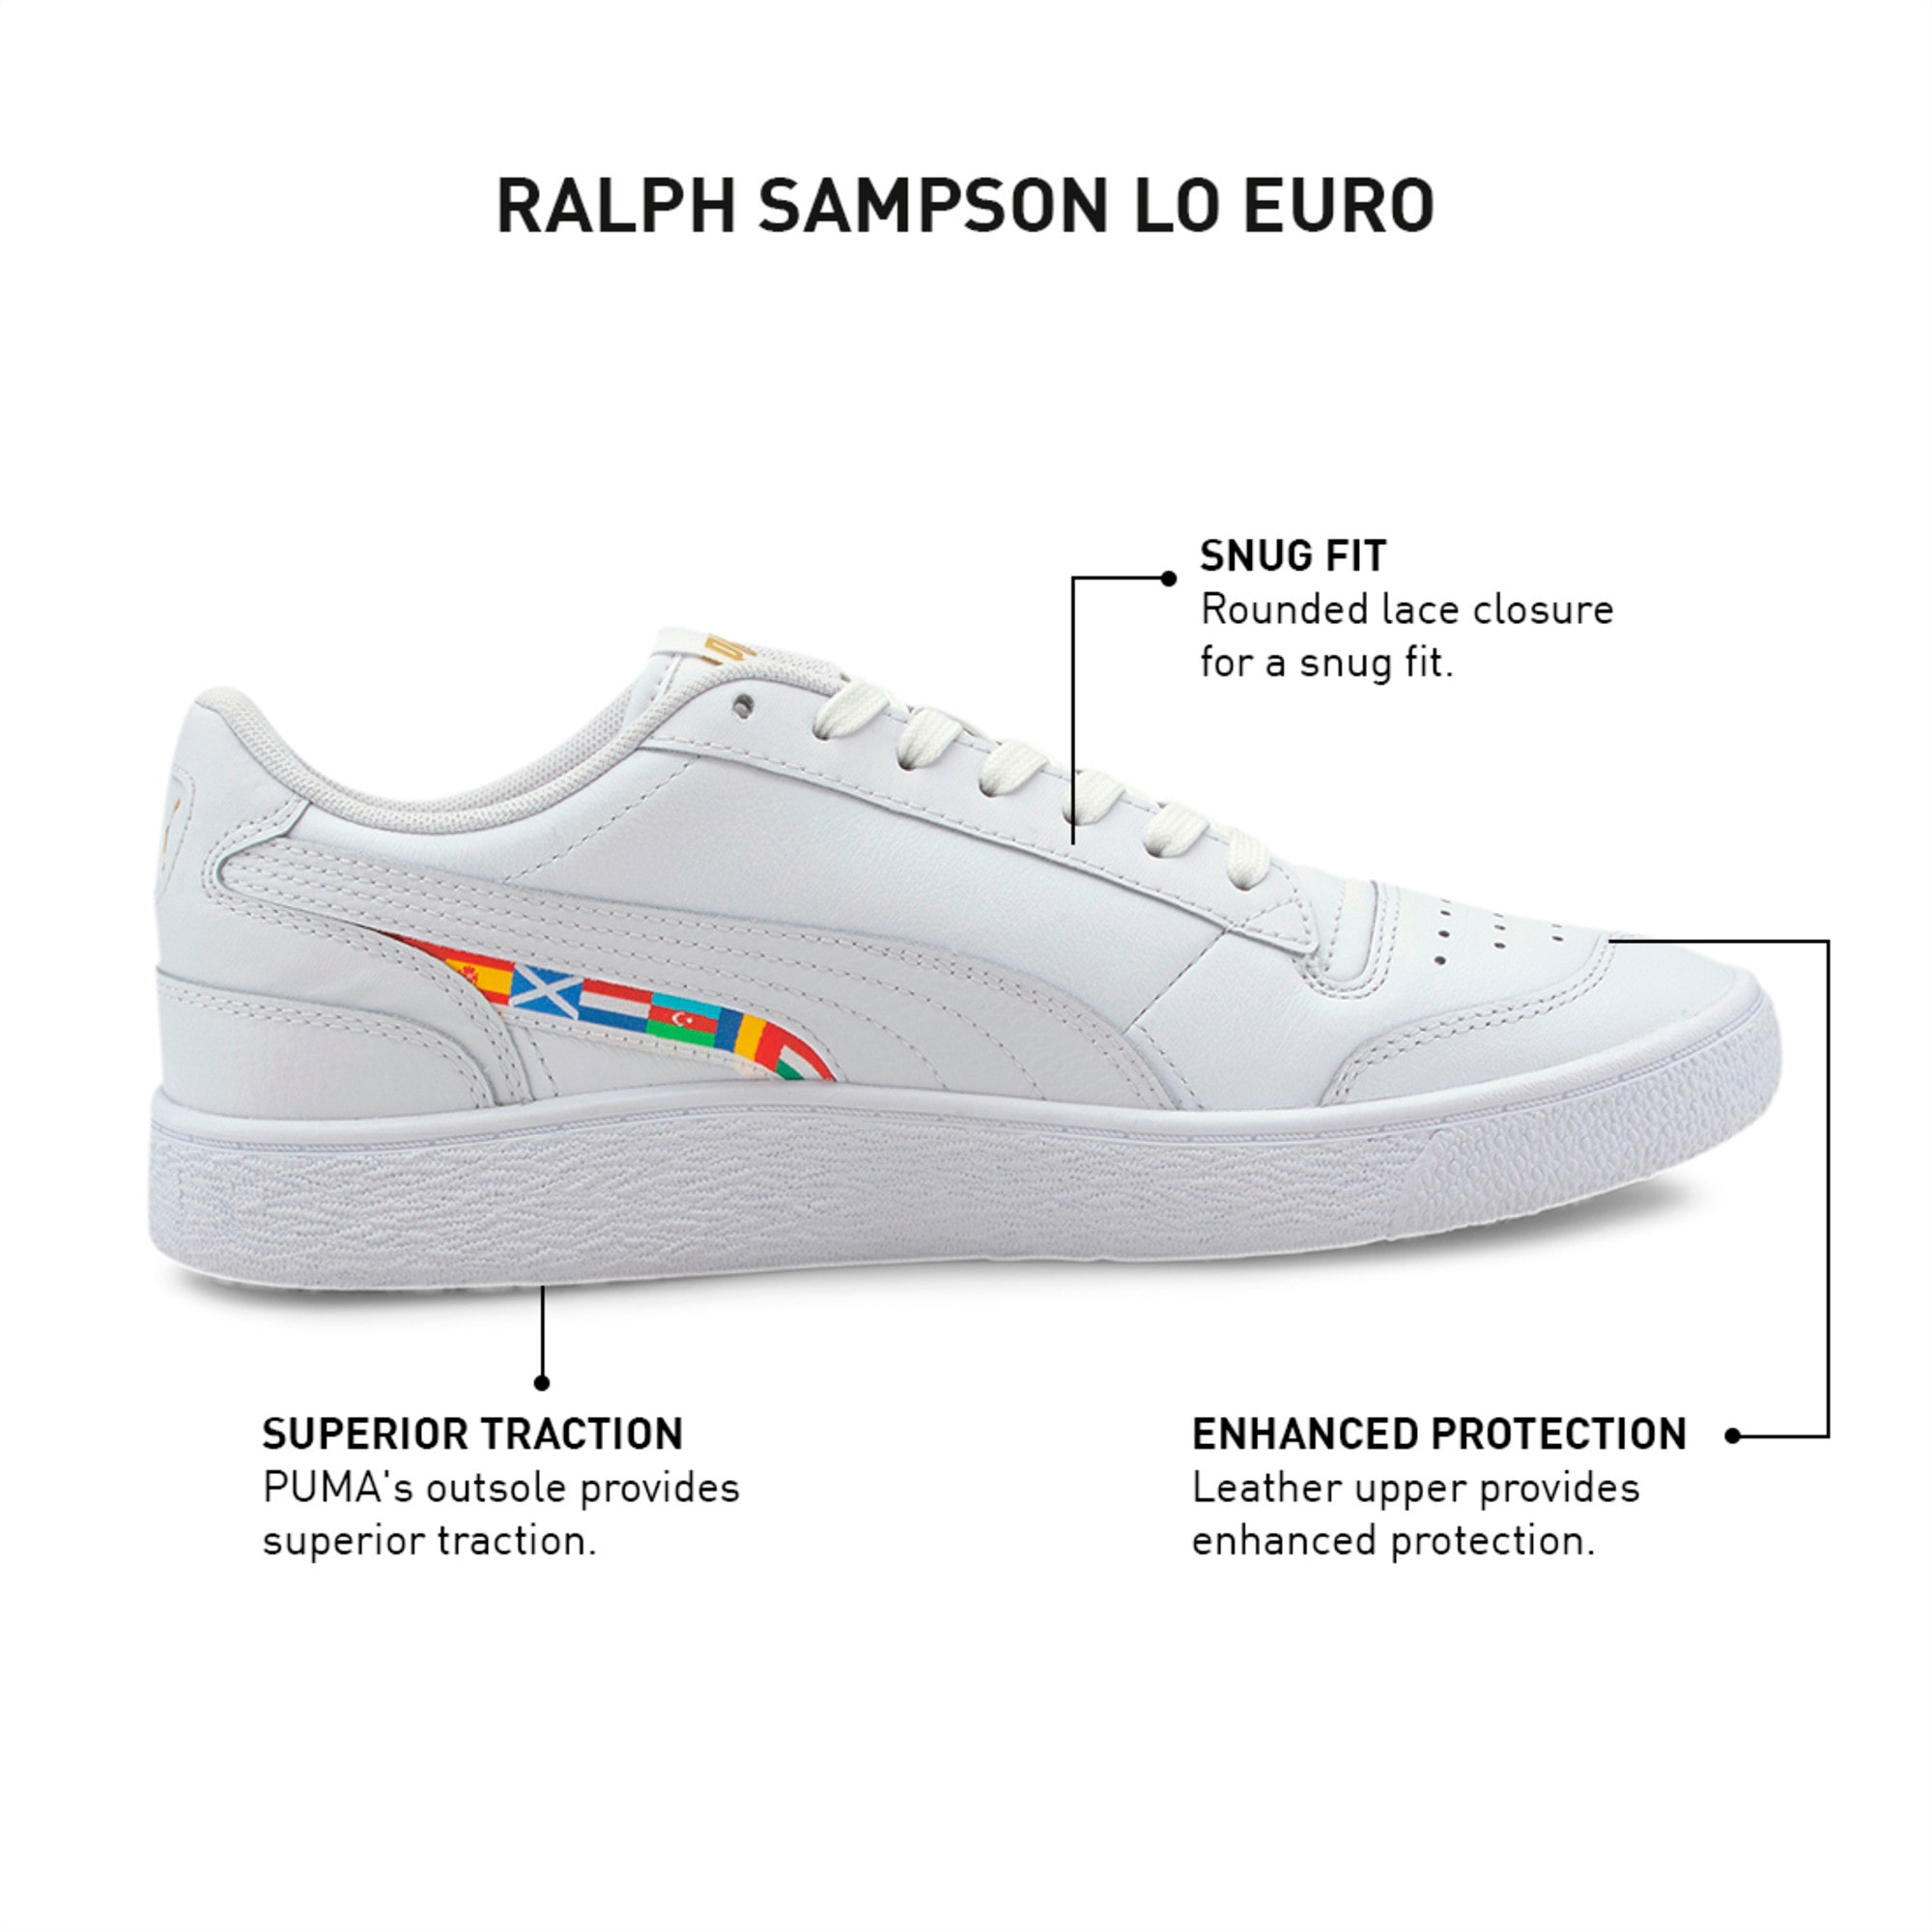 Puma Women's Ralph Sampson Lo Euro Men's Sneakers